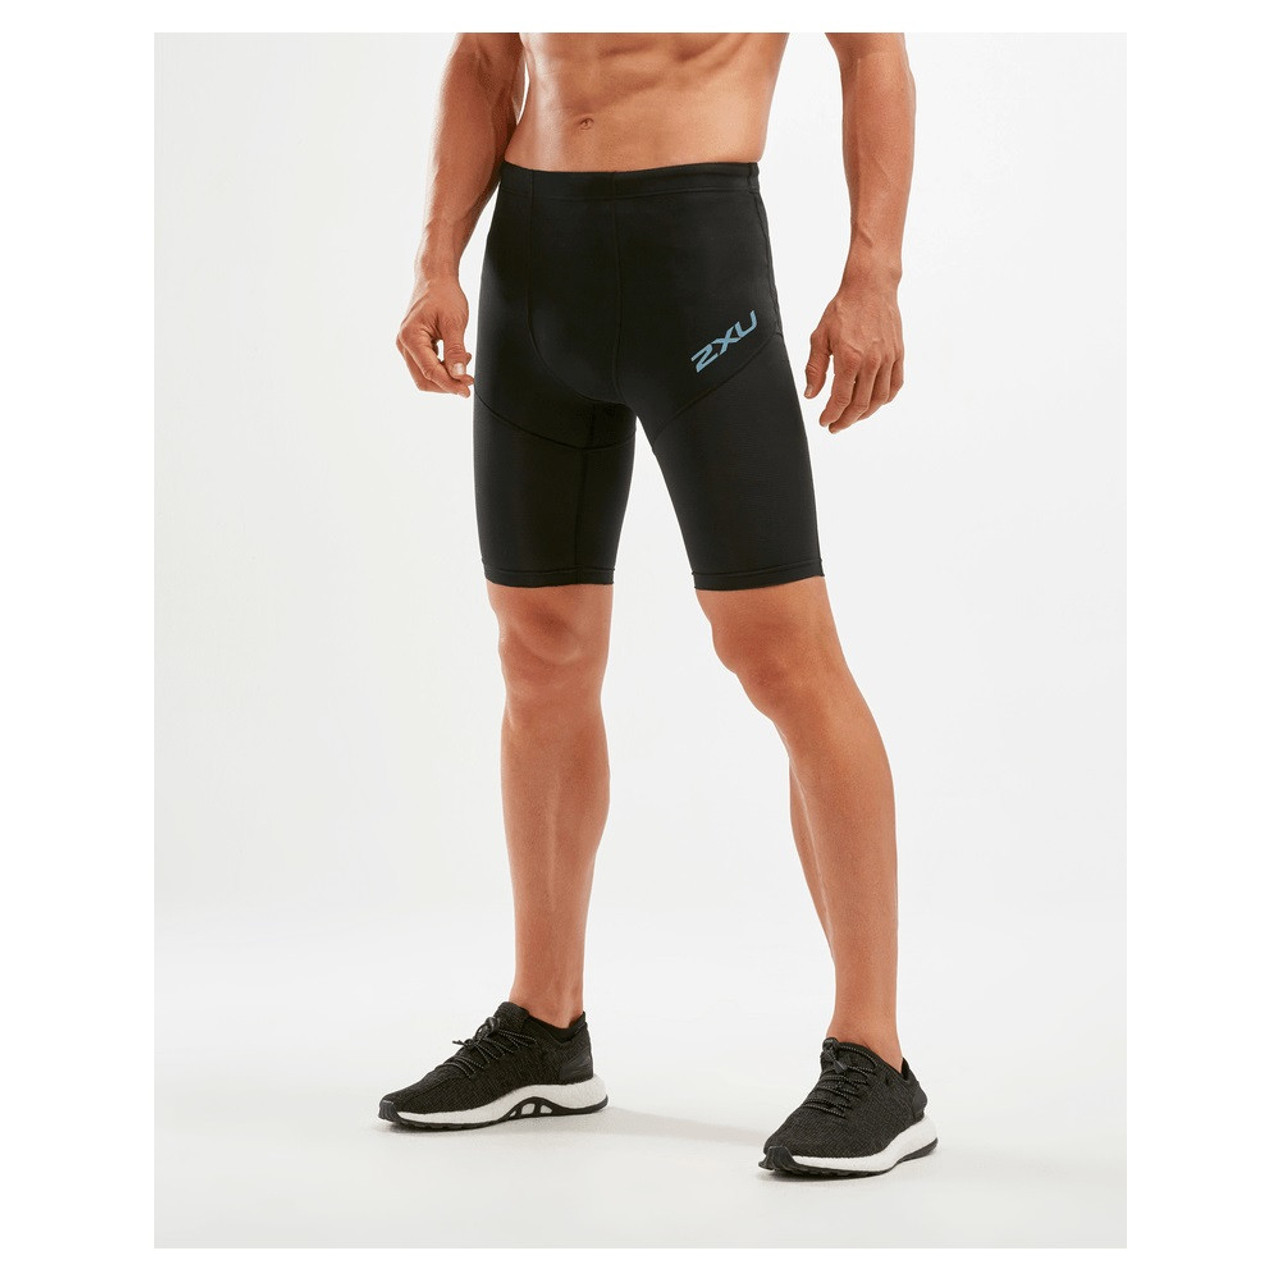 Men's Dash Compression Shorts